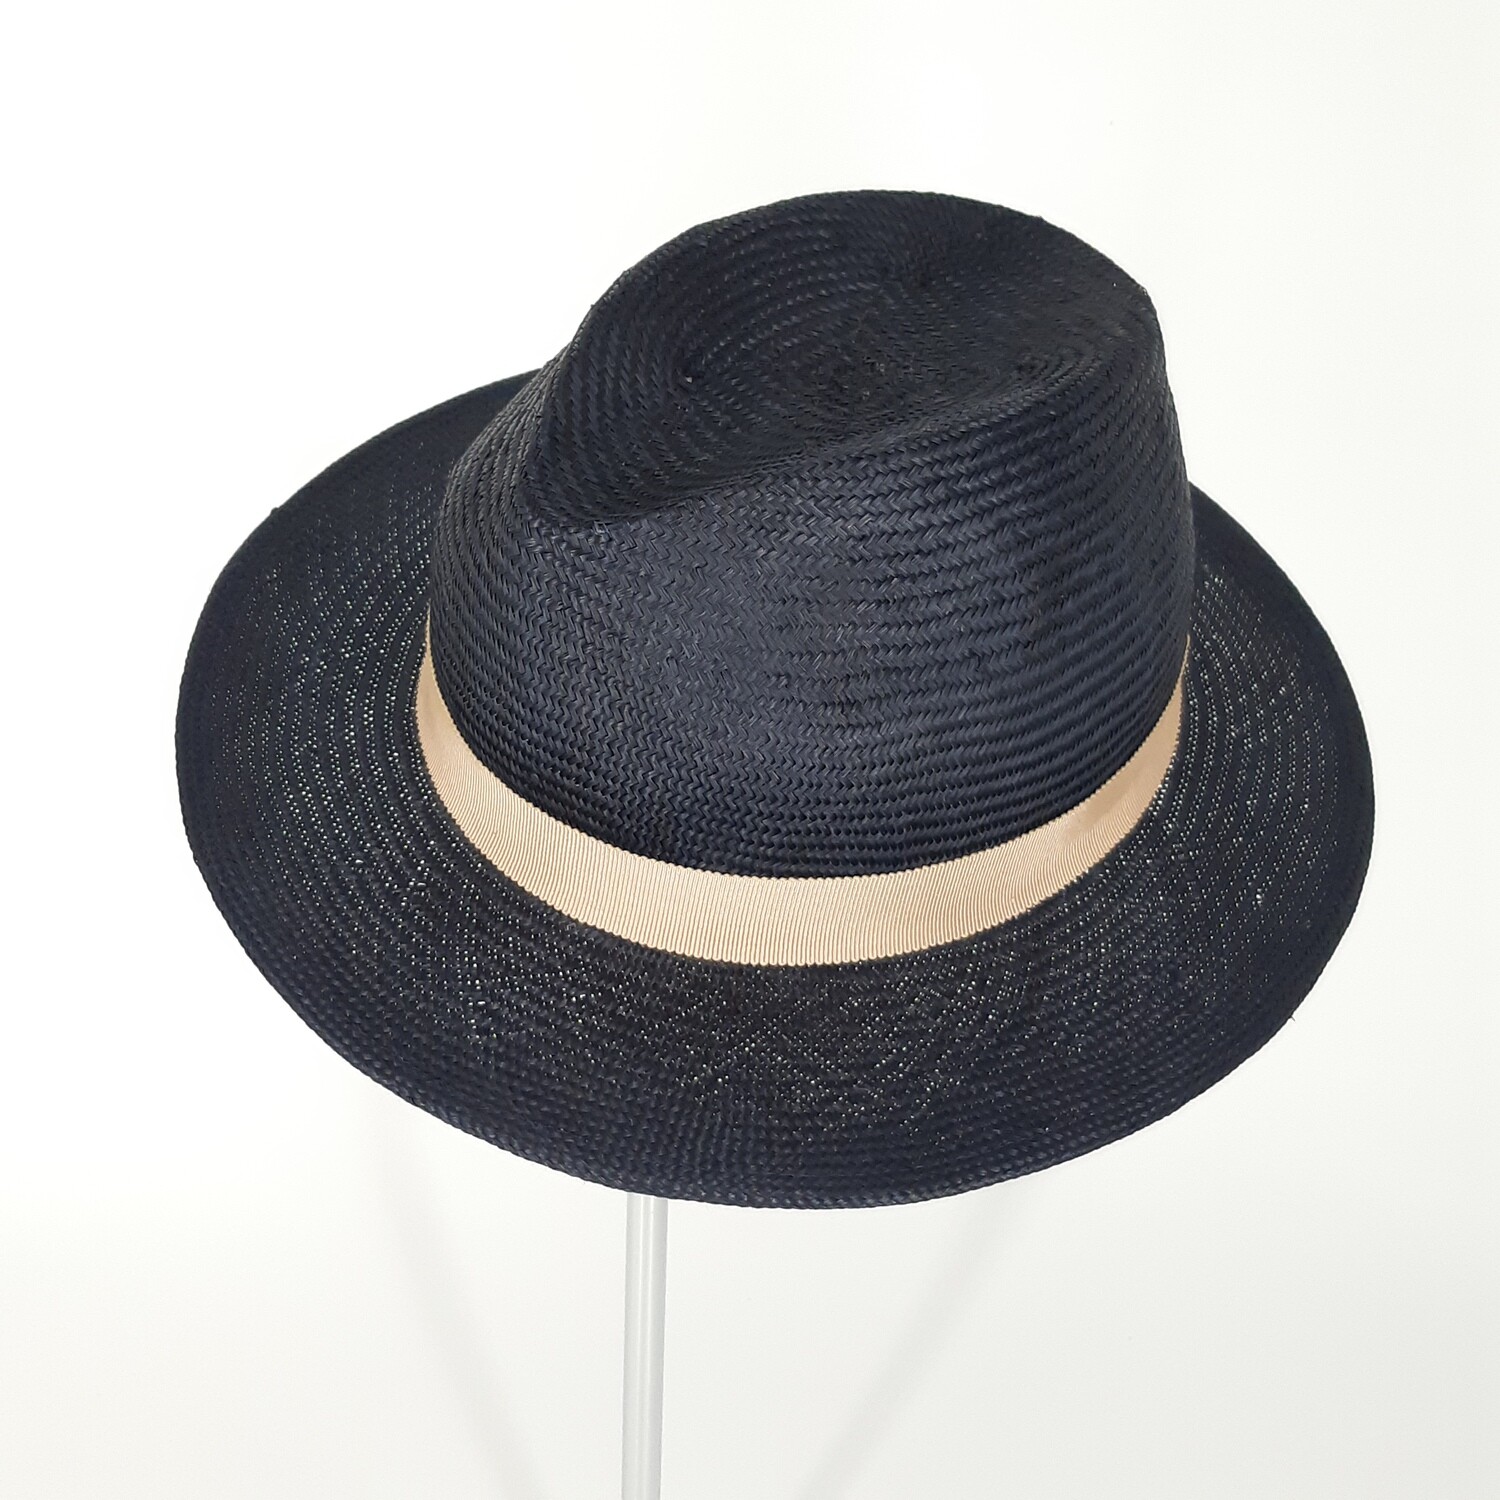 Zomer fedora hoed in donker blauwe parasisal met kleine rand